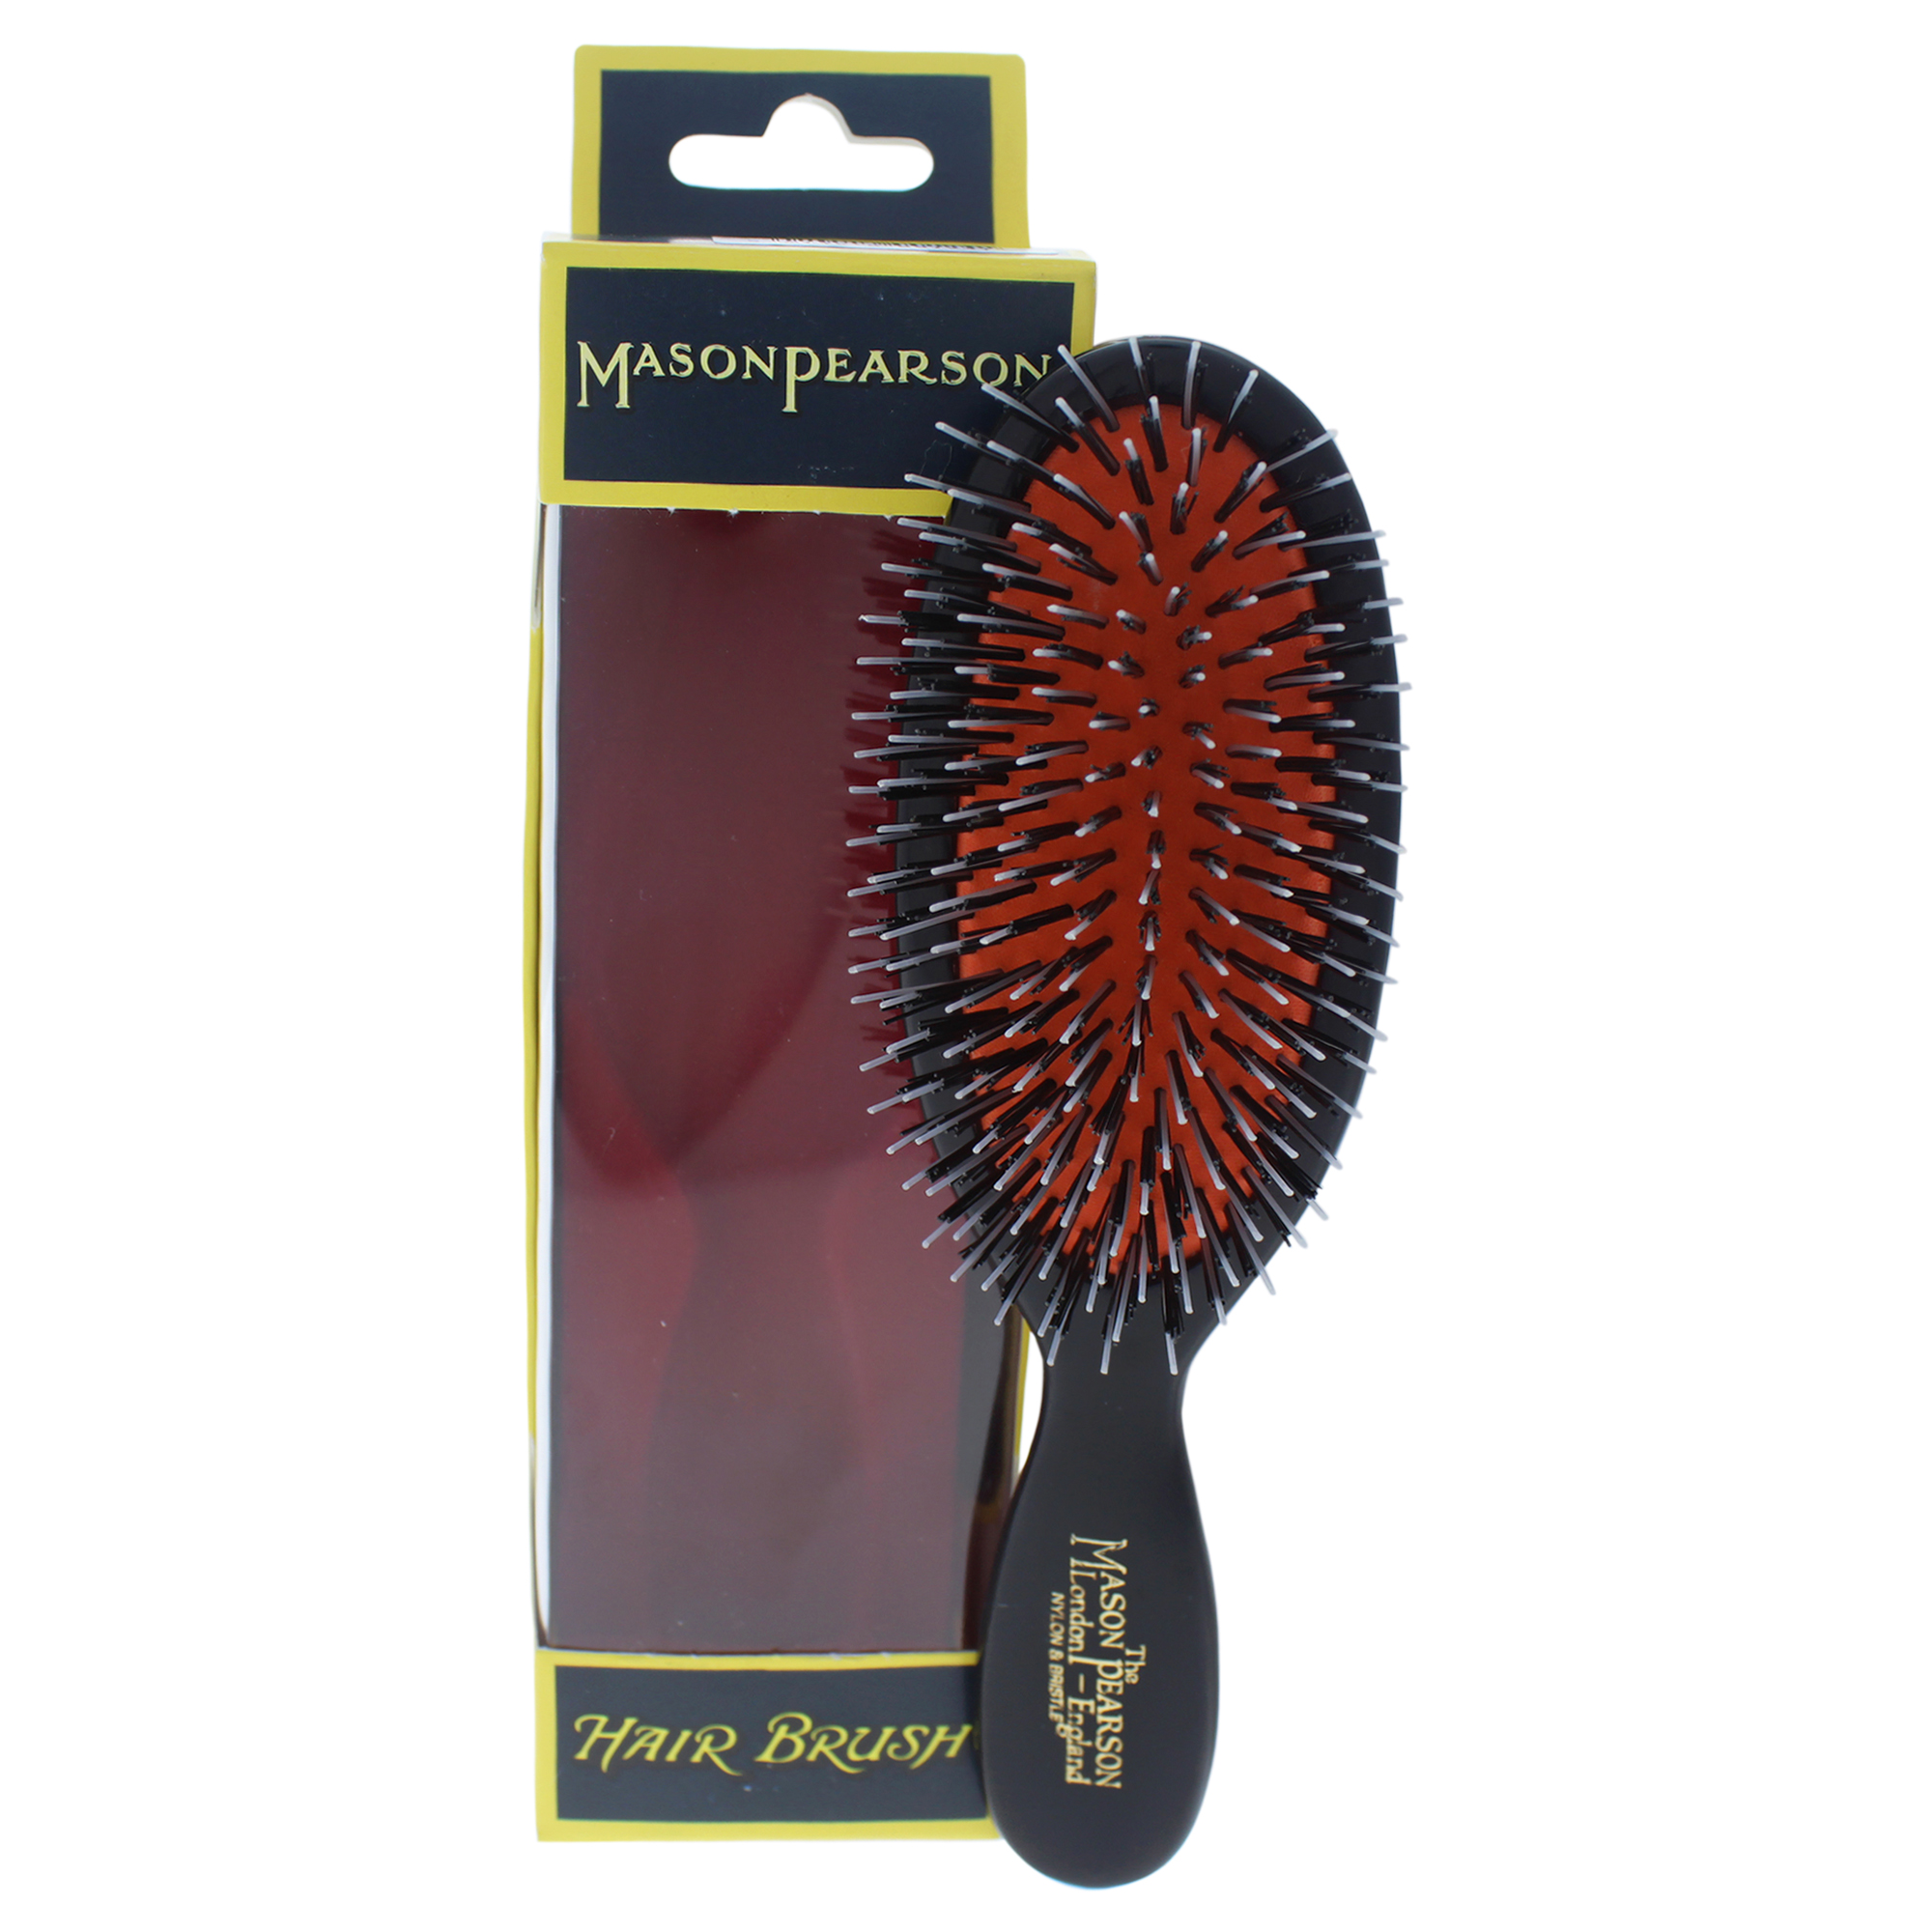 Mason Pearson Hair Brush Pocket Bristle & Nylon Dark Ruby BN4 - image 1 of 7